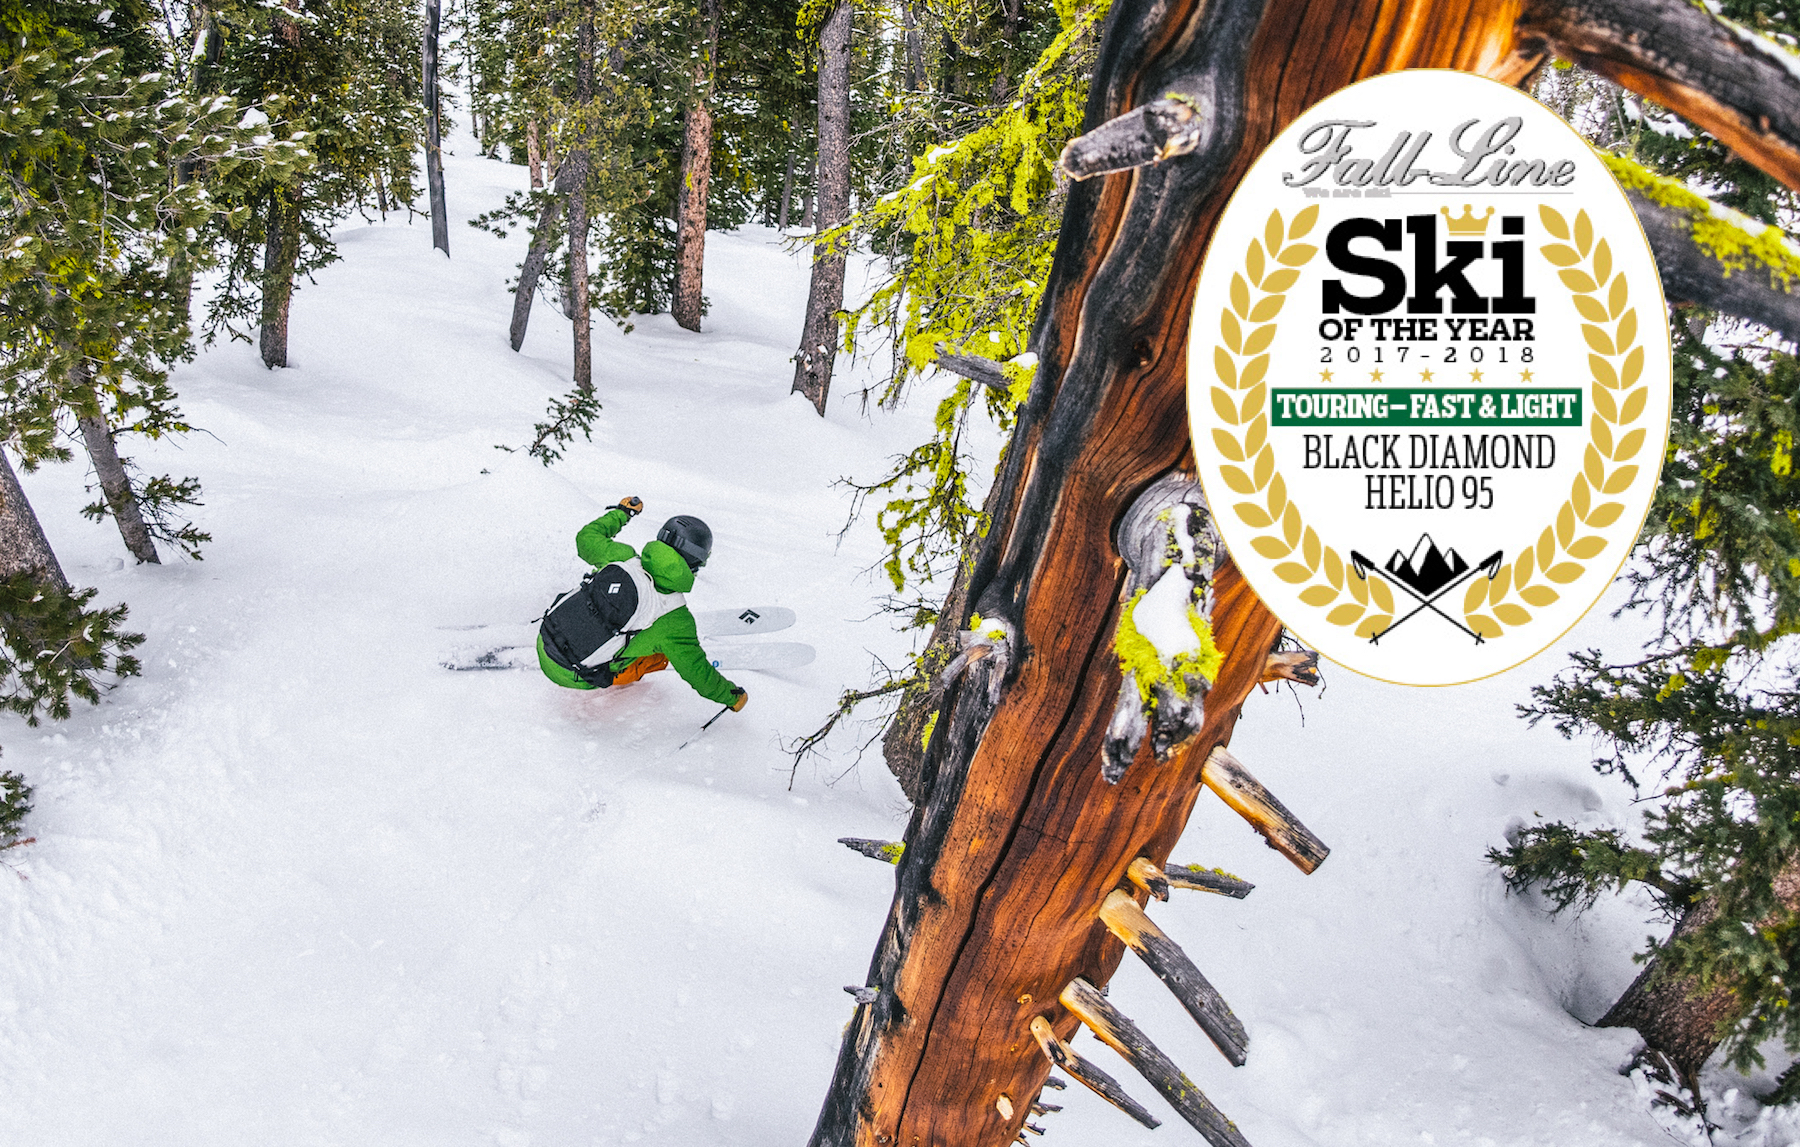 The Black Diamond Helio 95 ski wins a 'best touring ski: fast and light' award from Fall-Line Skiing magazine